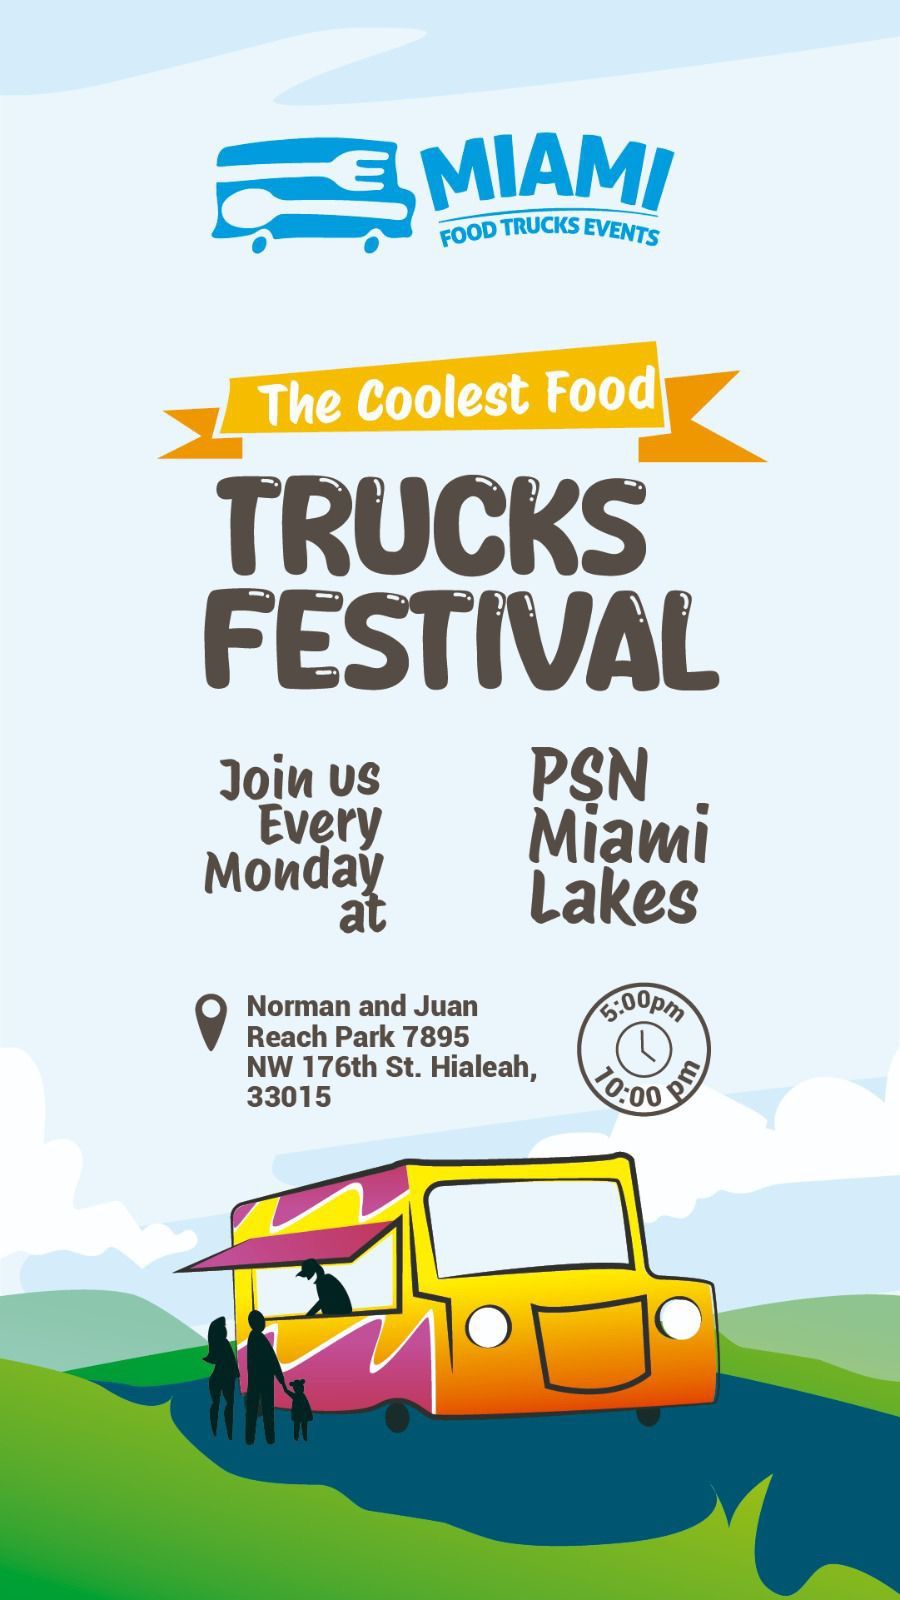 Food Trucks Mondays At Miami Lakes Psn Park